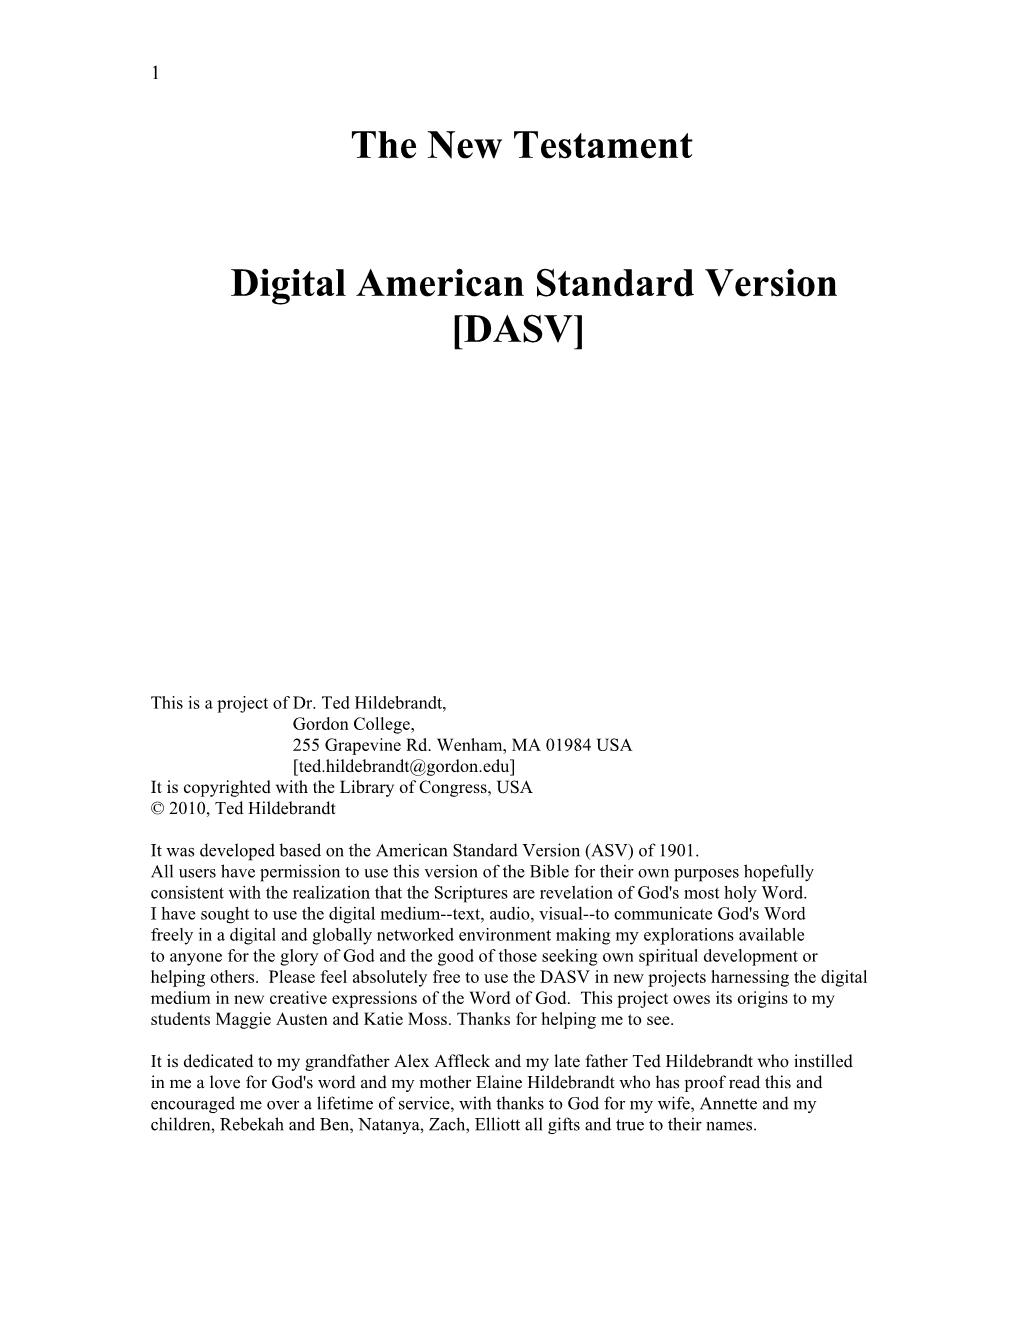 New Testament, DASV, Digital American Standard Version